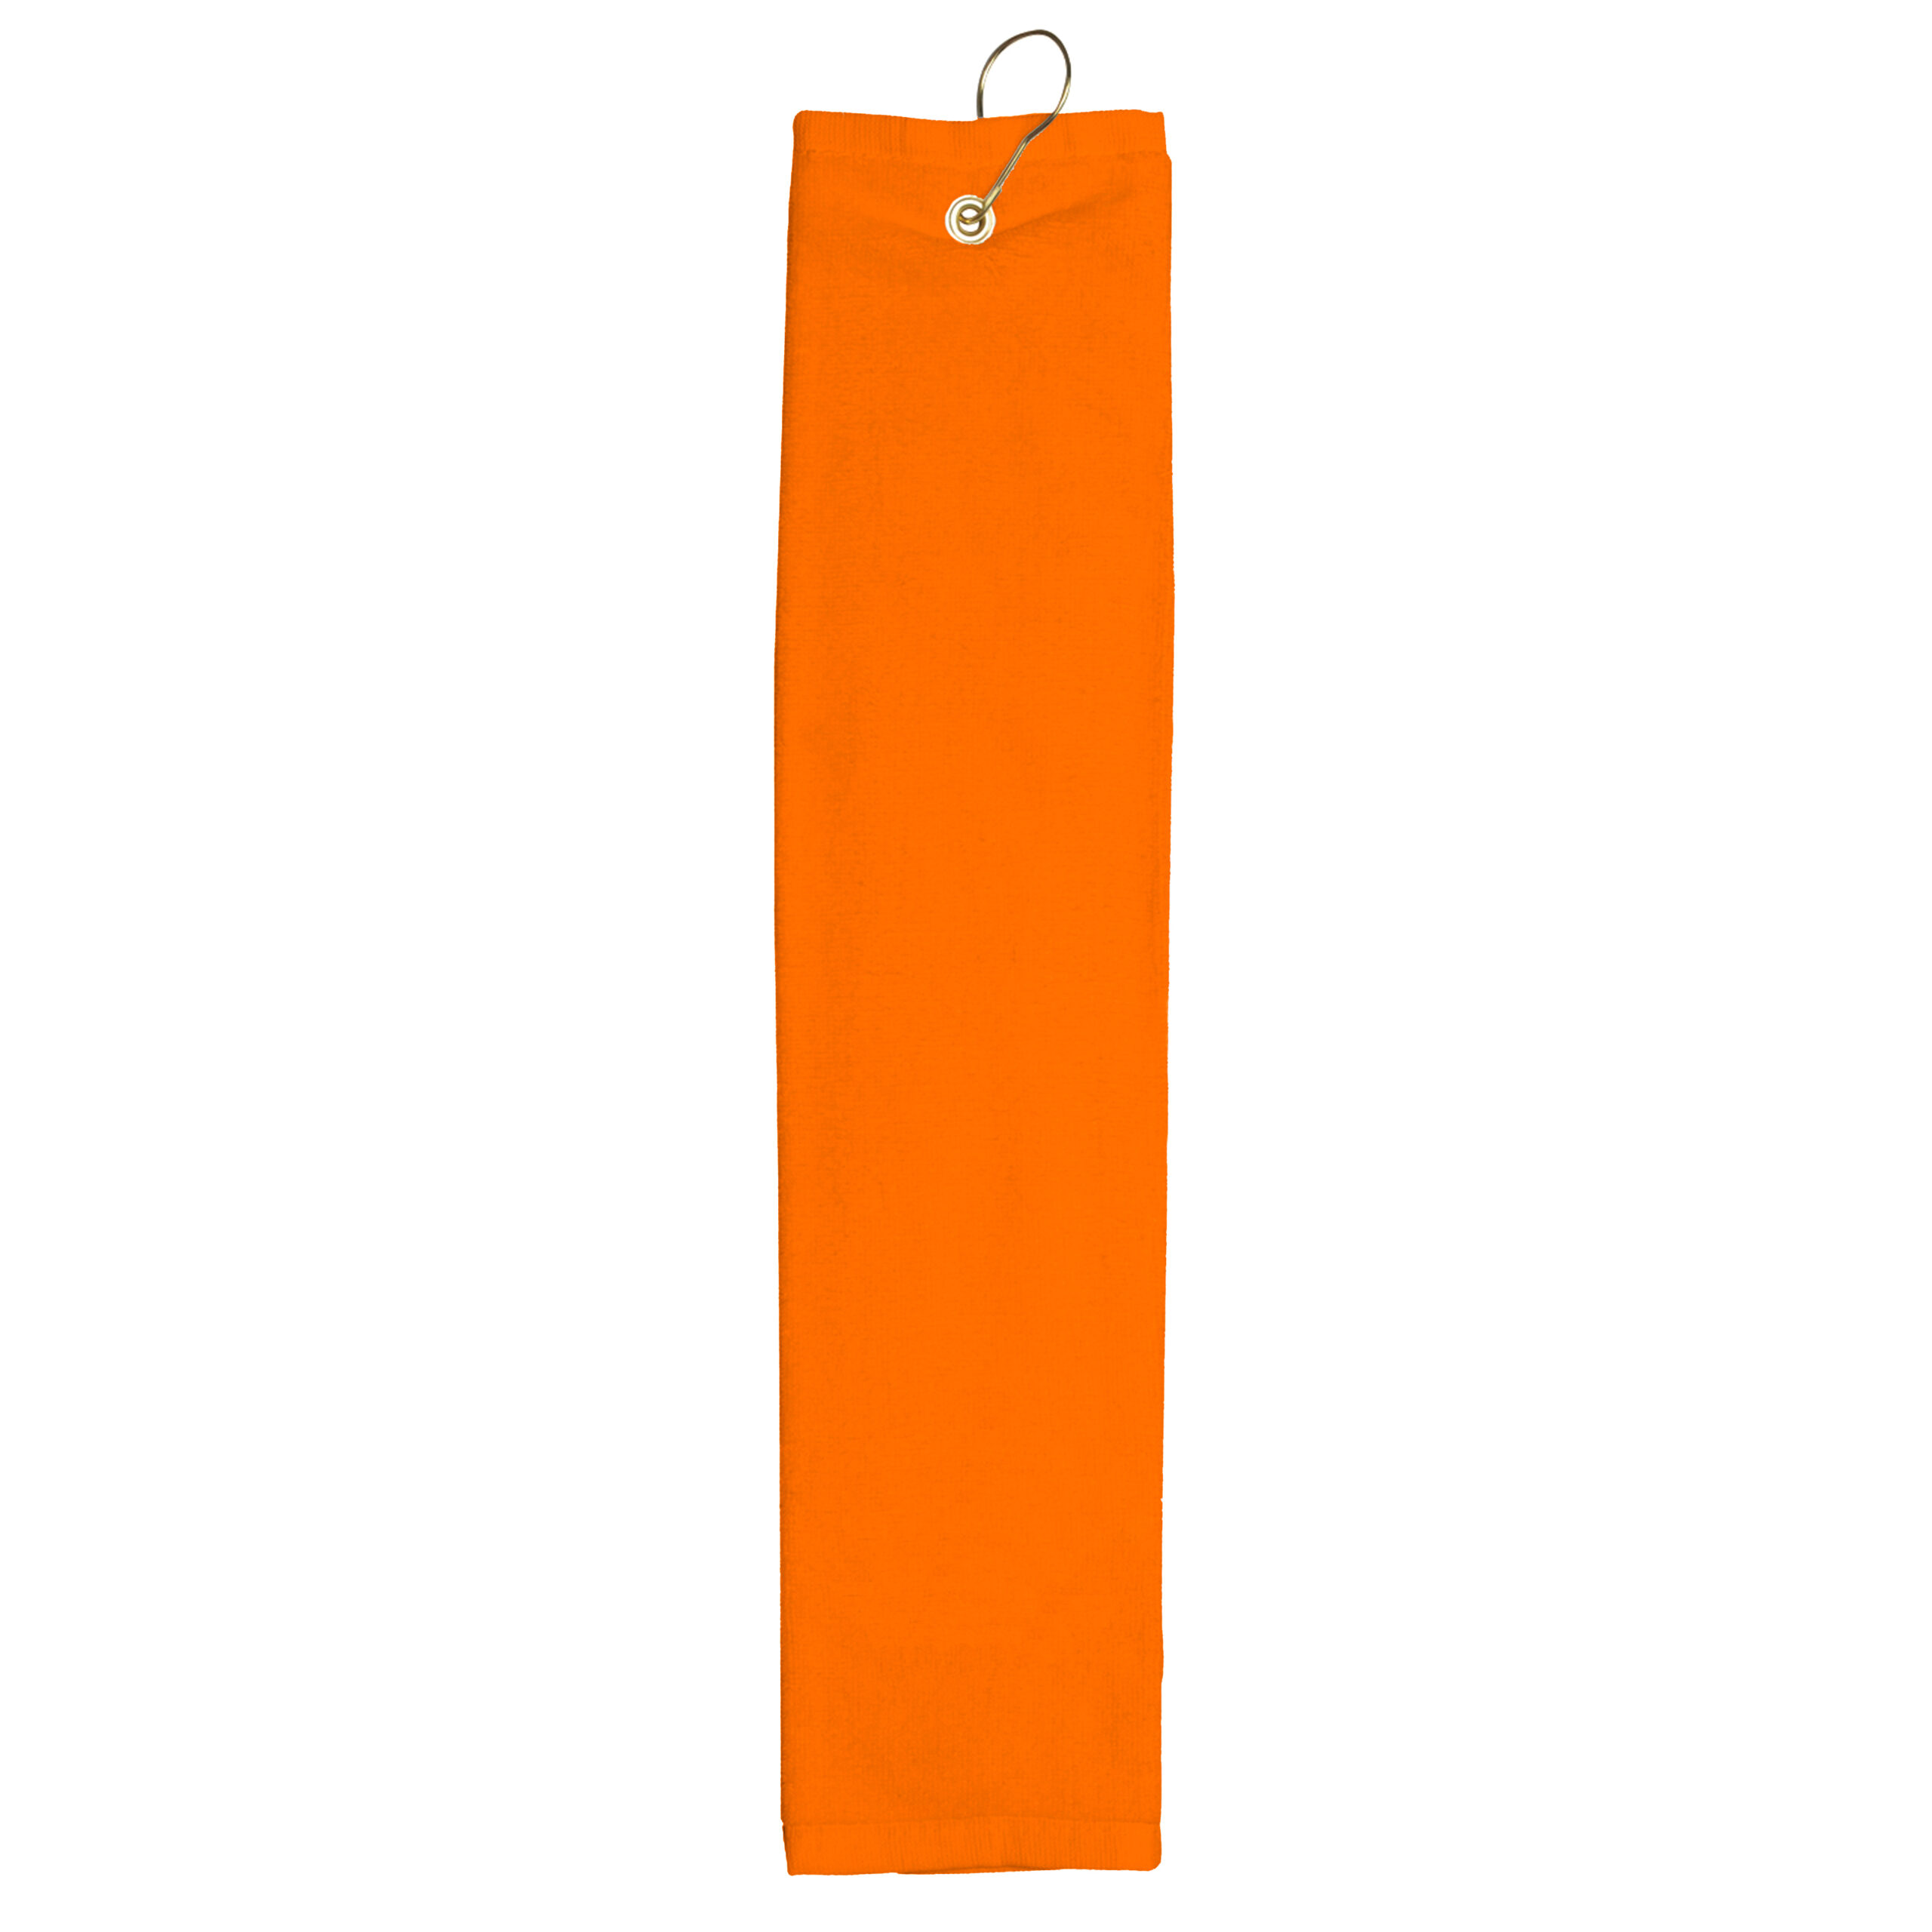 TRU24-orange-TG-blank-01